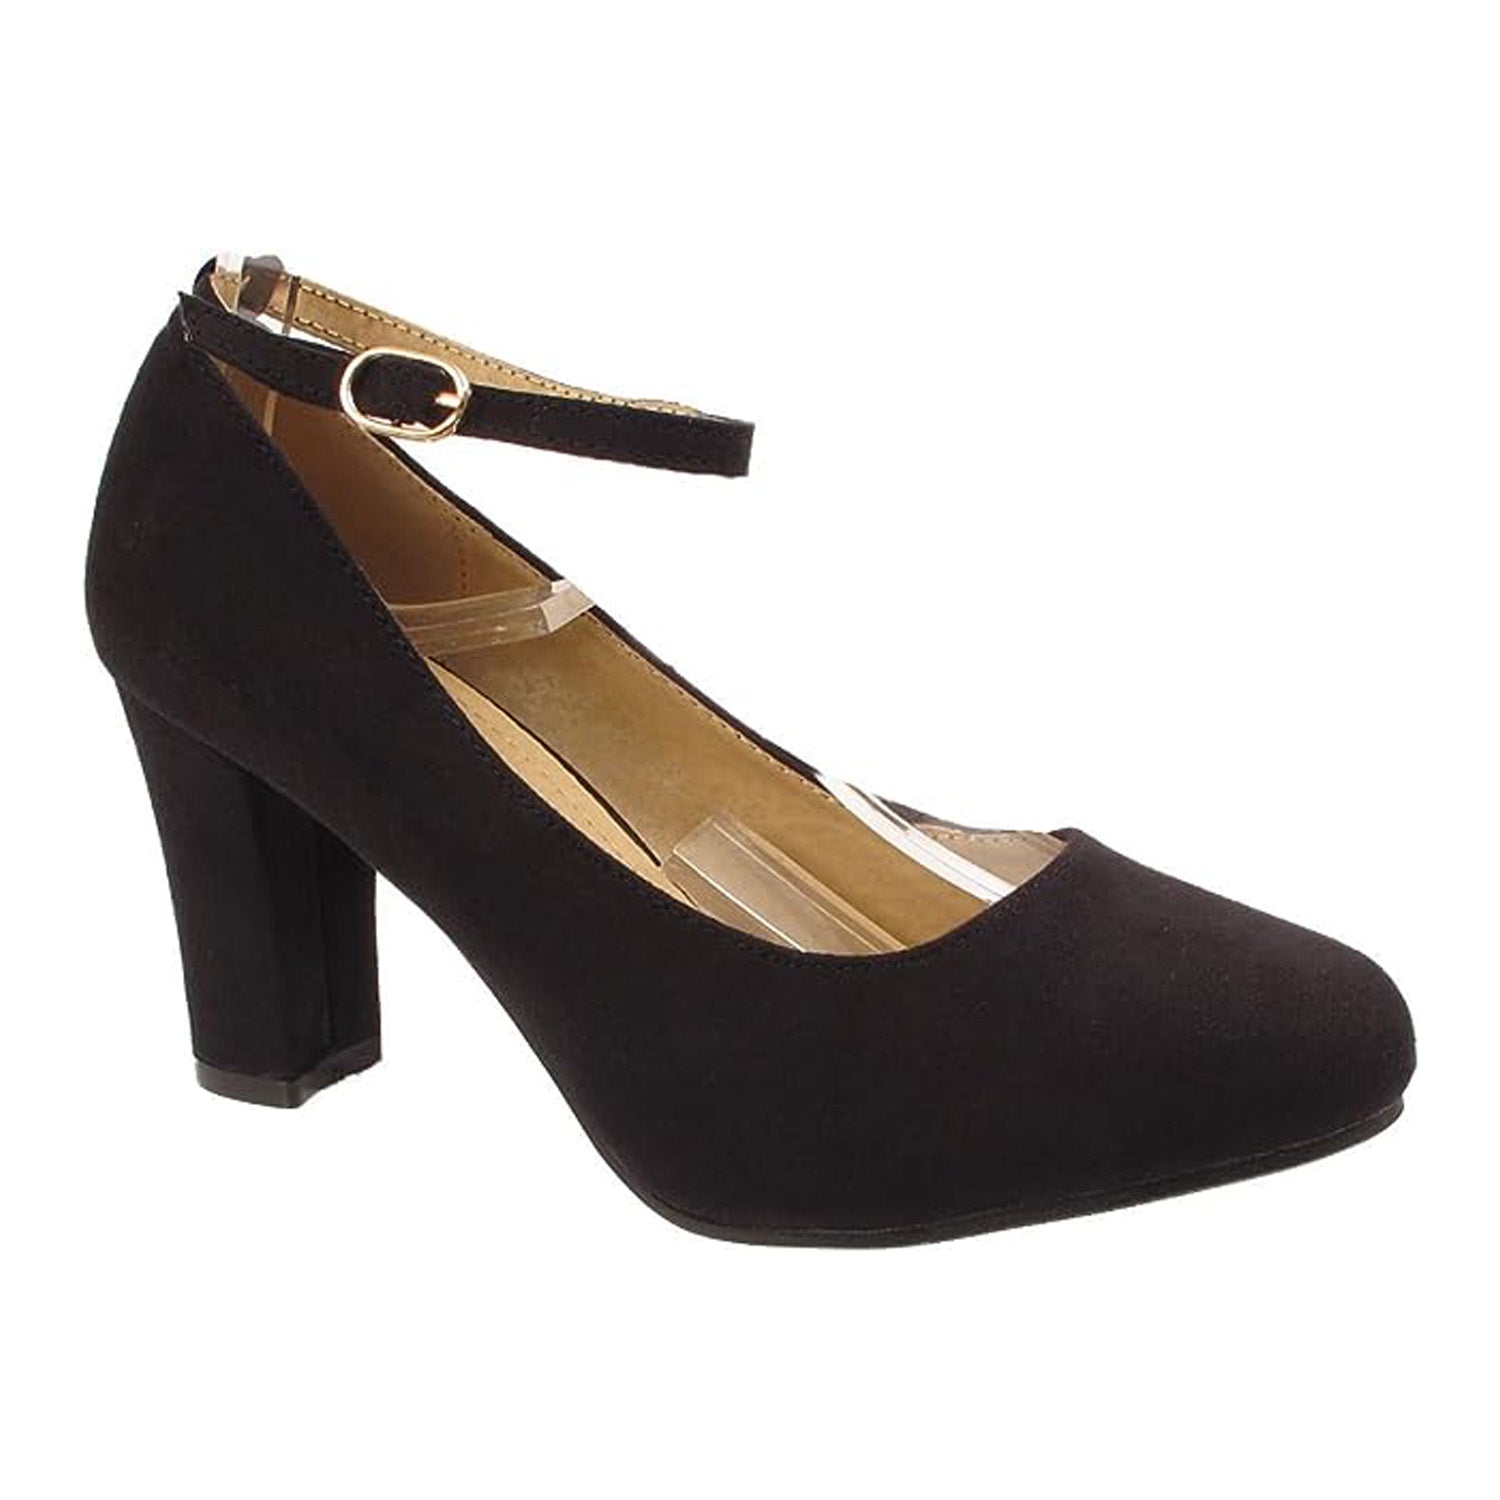 Buy Women's Block Heels, Ankle Strap Low Heel Pump Sandals, VIANNA-WHITE  PU-8 at Amazon.in